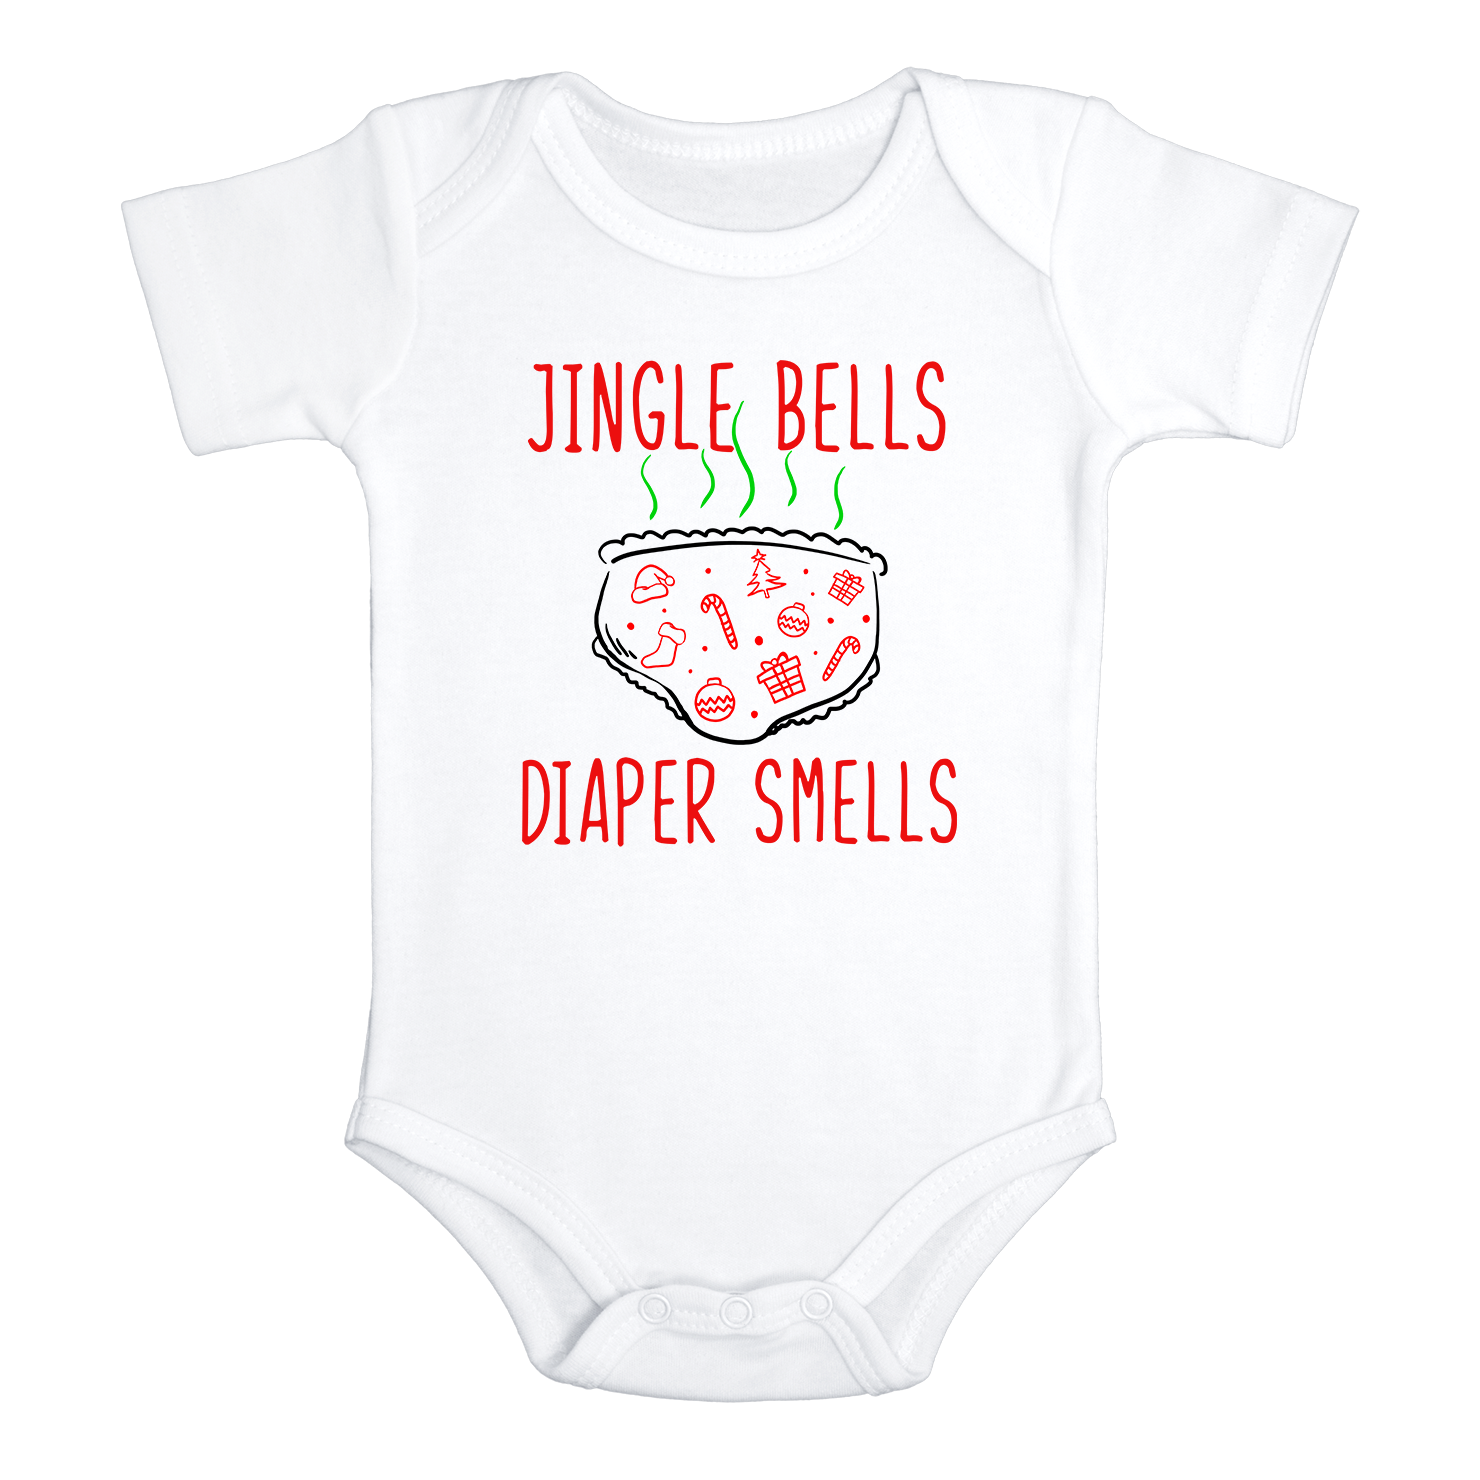 JINGLE BELLS DIAPER SMELLS Funny baby onesies Christmas bodysuit (white: short or long sleeve)